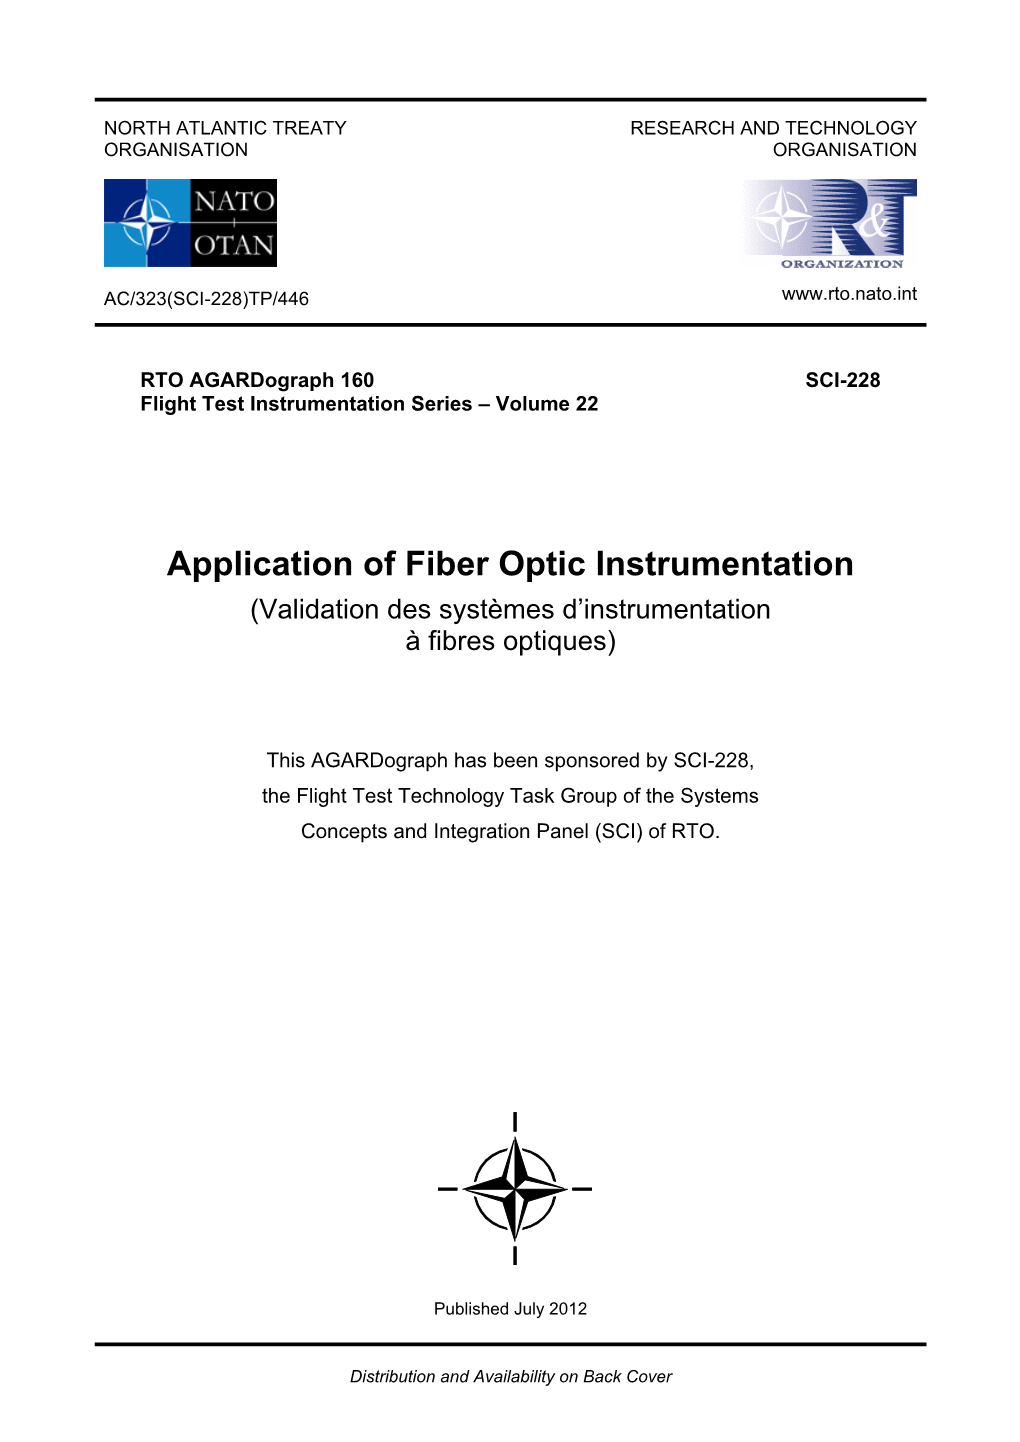 Application of Fiber Optic Instrumentation (Validation Des Systèmes D’Instrumentation À Fibres Optiques)